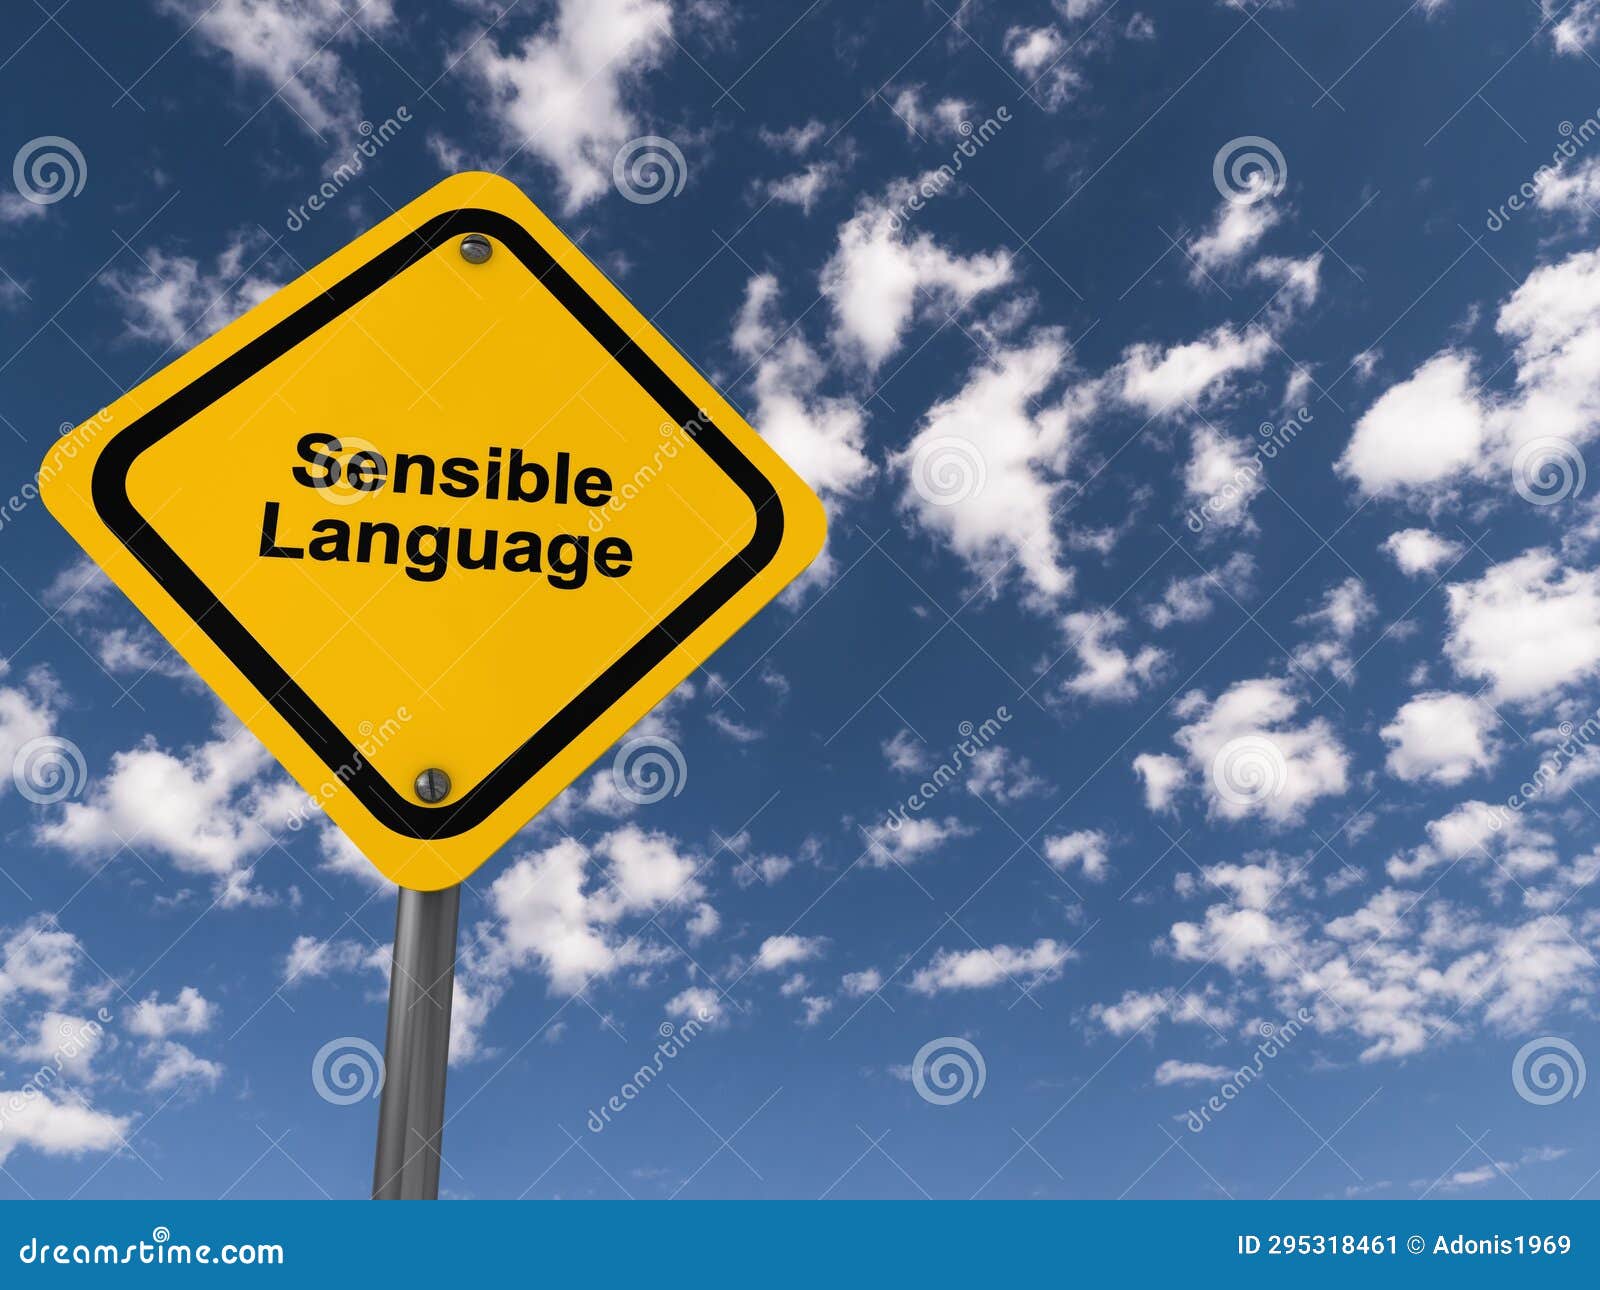 sensible language traffic sign on blue sky